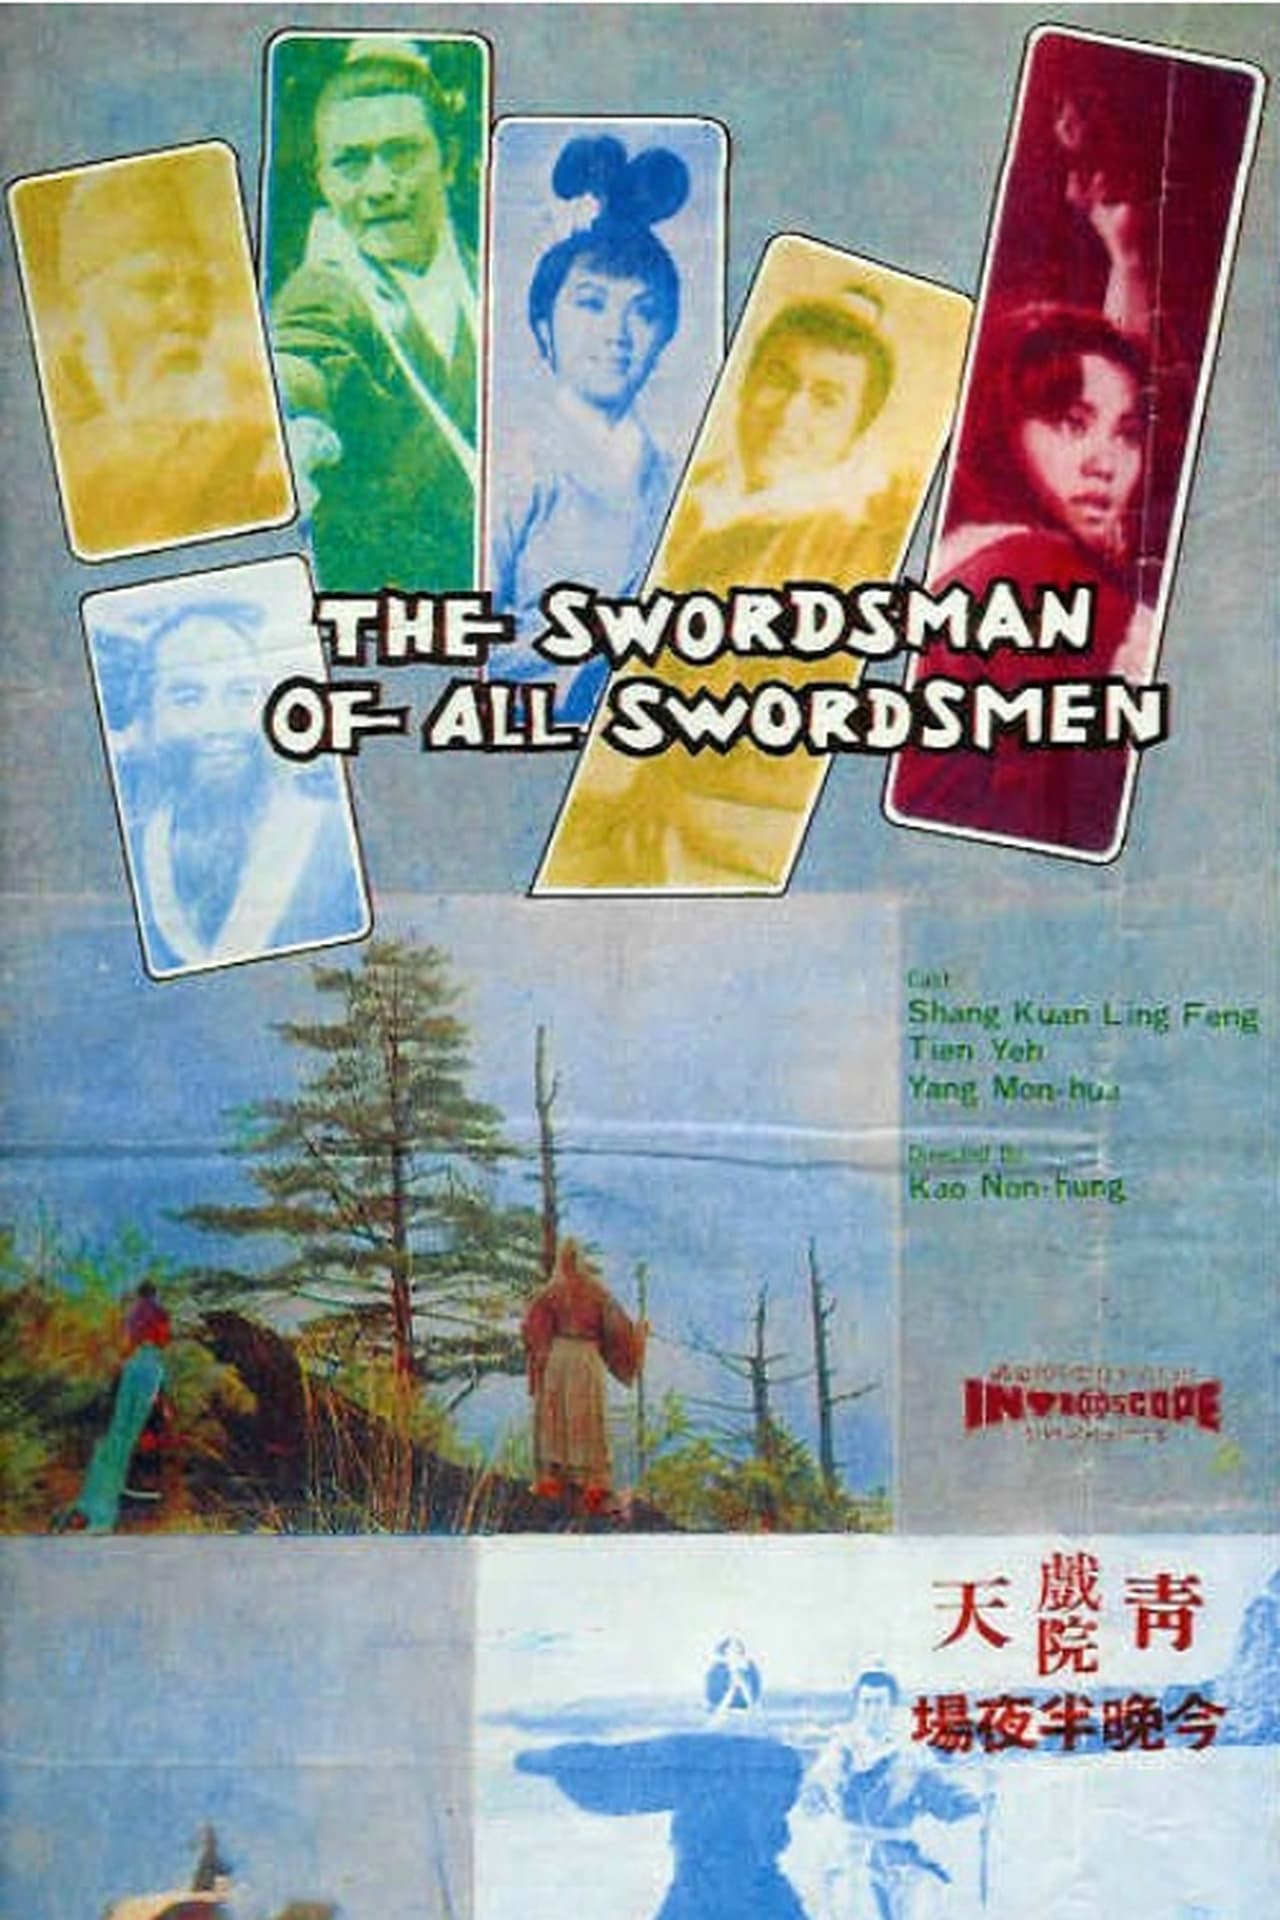 The Swordsman of all Swordsmen